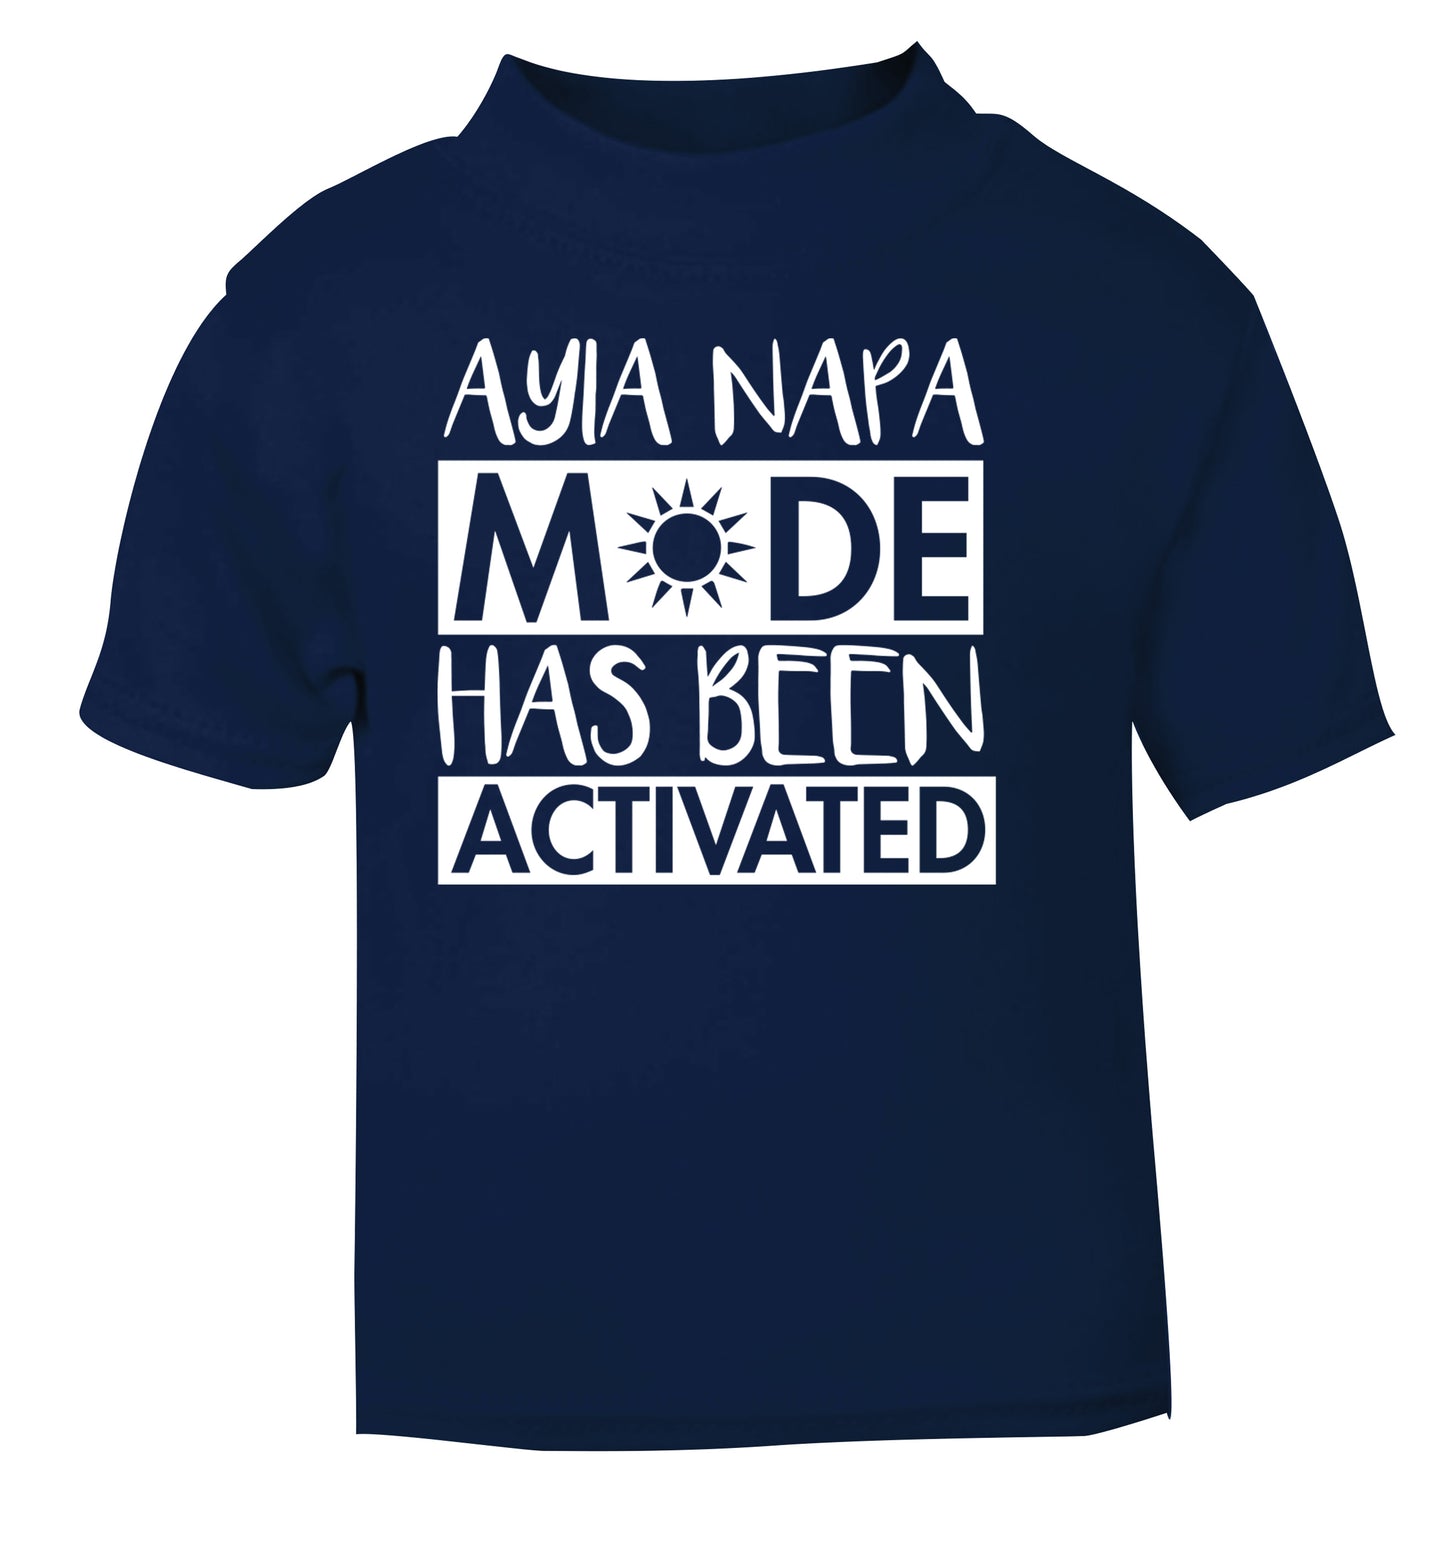 Ayia Napa mode has been activated navy Baby Toddler Tshirt 2 Years